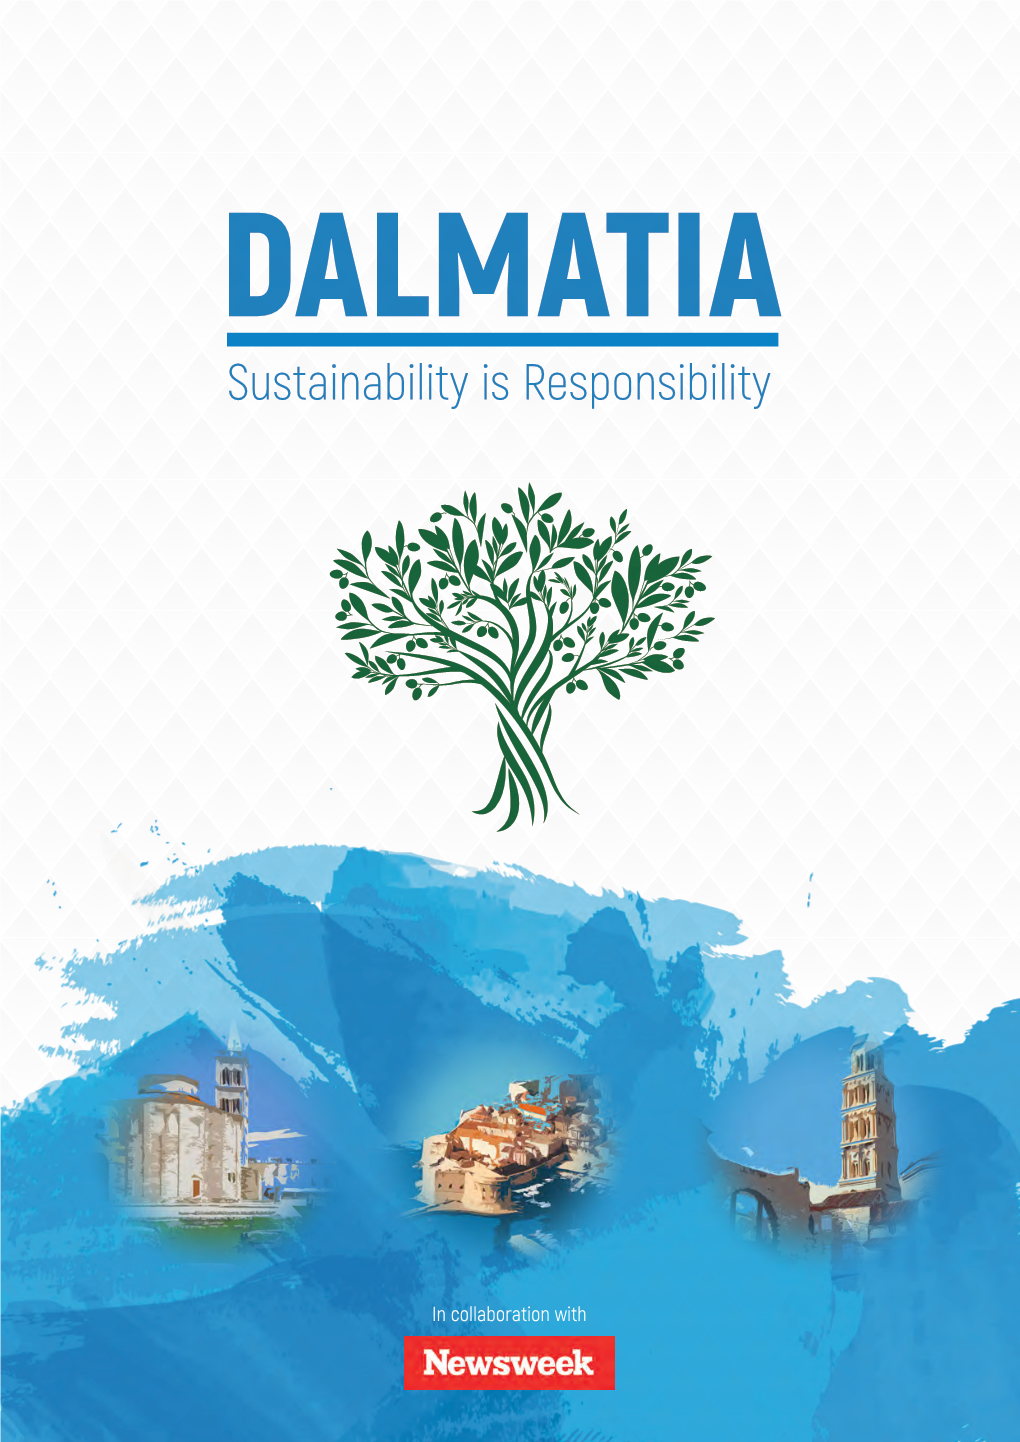 DALMATIA Sustainability Is Responsibility